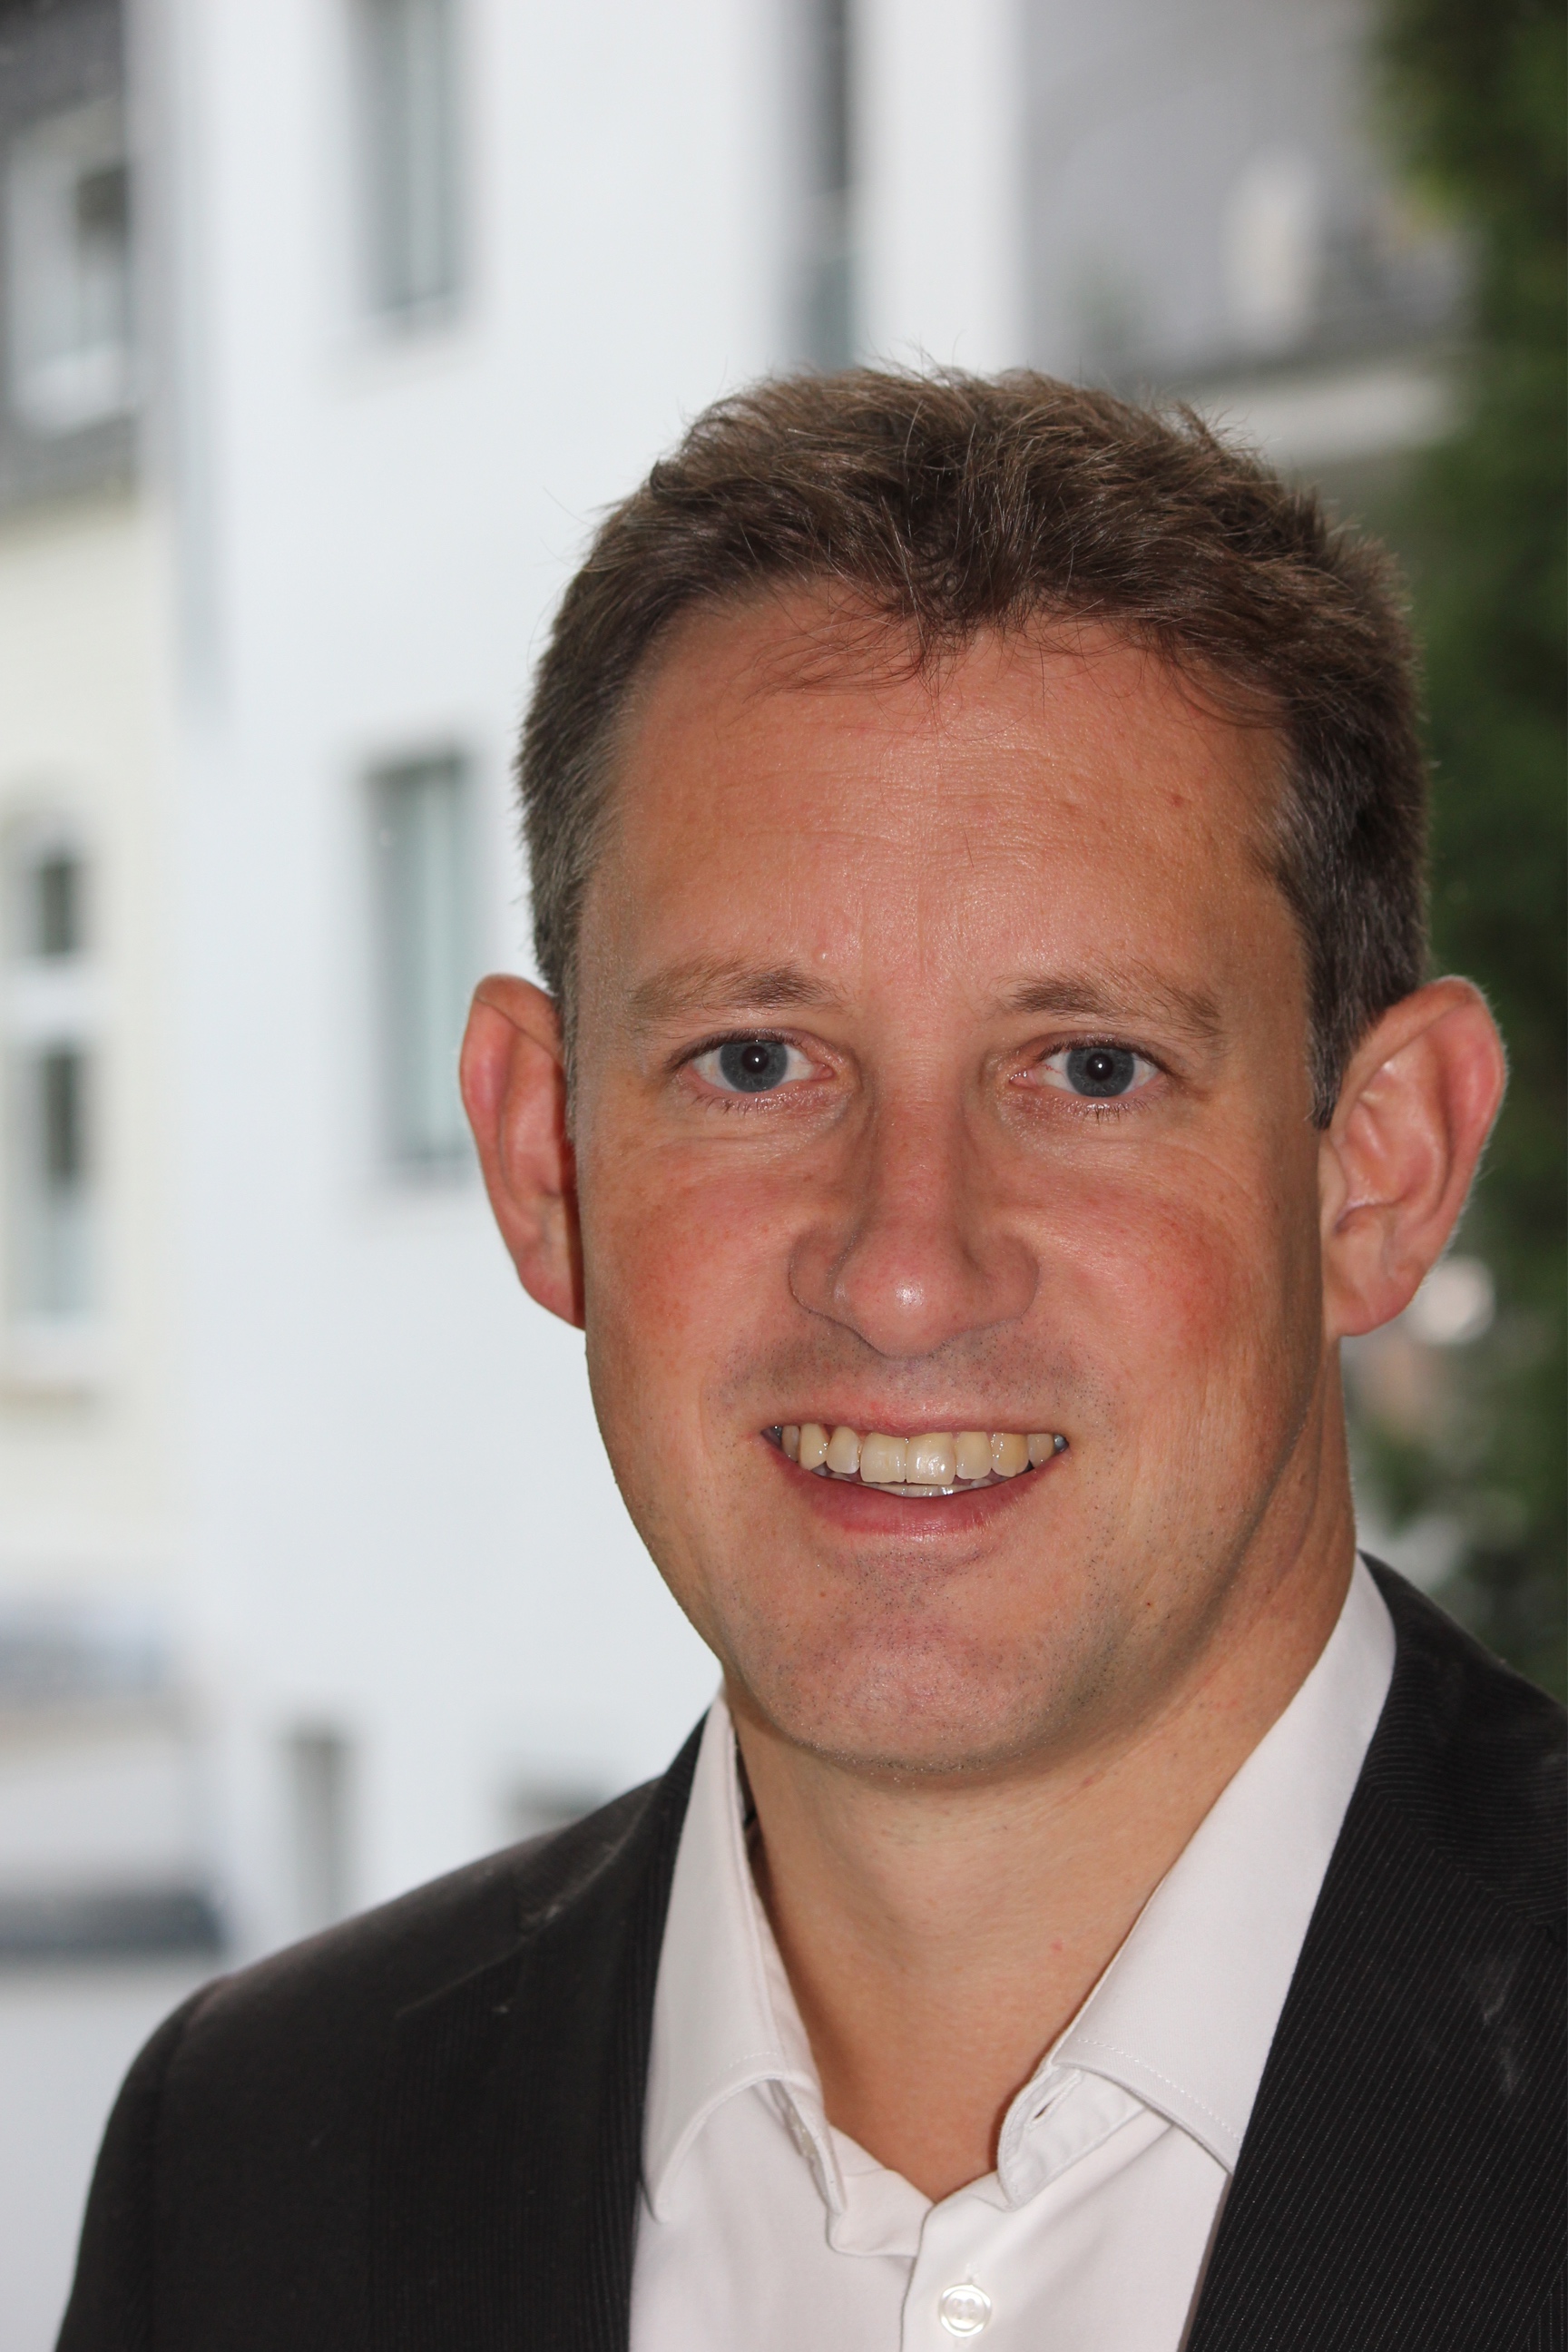 Michael Raschke ist neuer Director Professional Services der iTAC Software AG